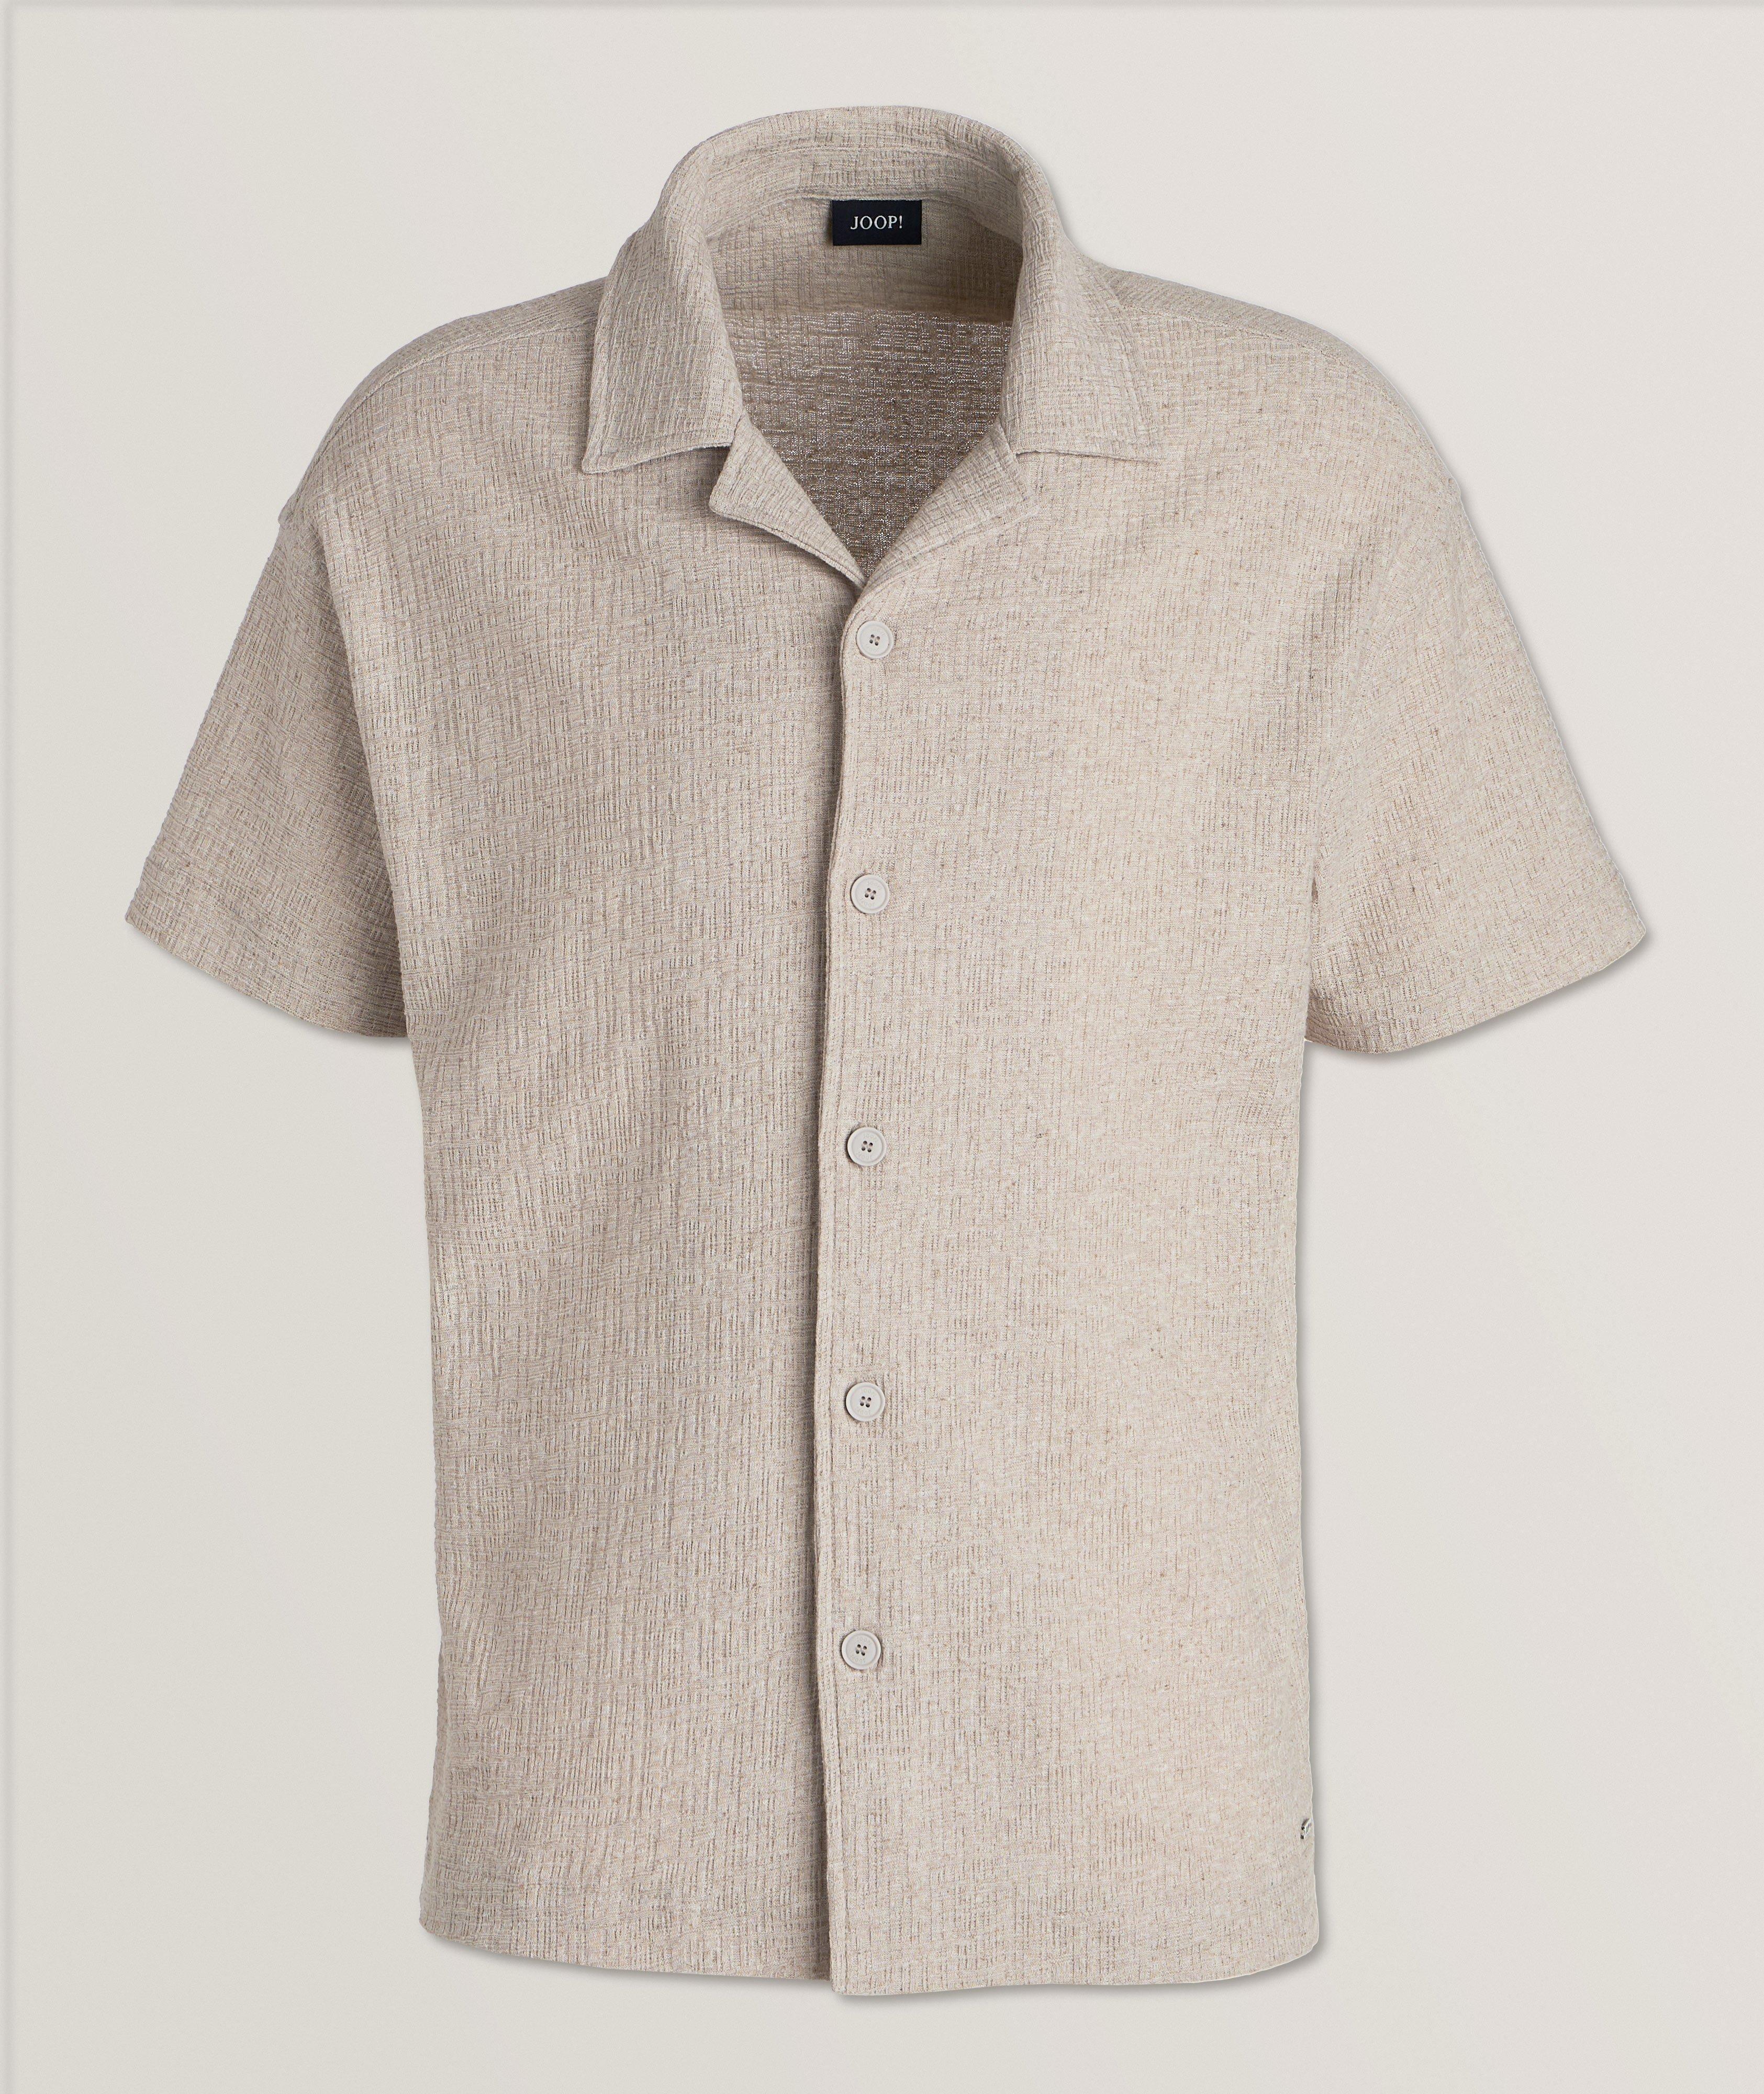 Tate Textured Cotton-Blend Camp Shirt  image 0